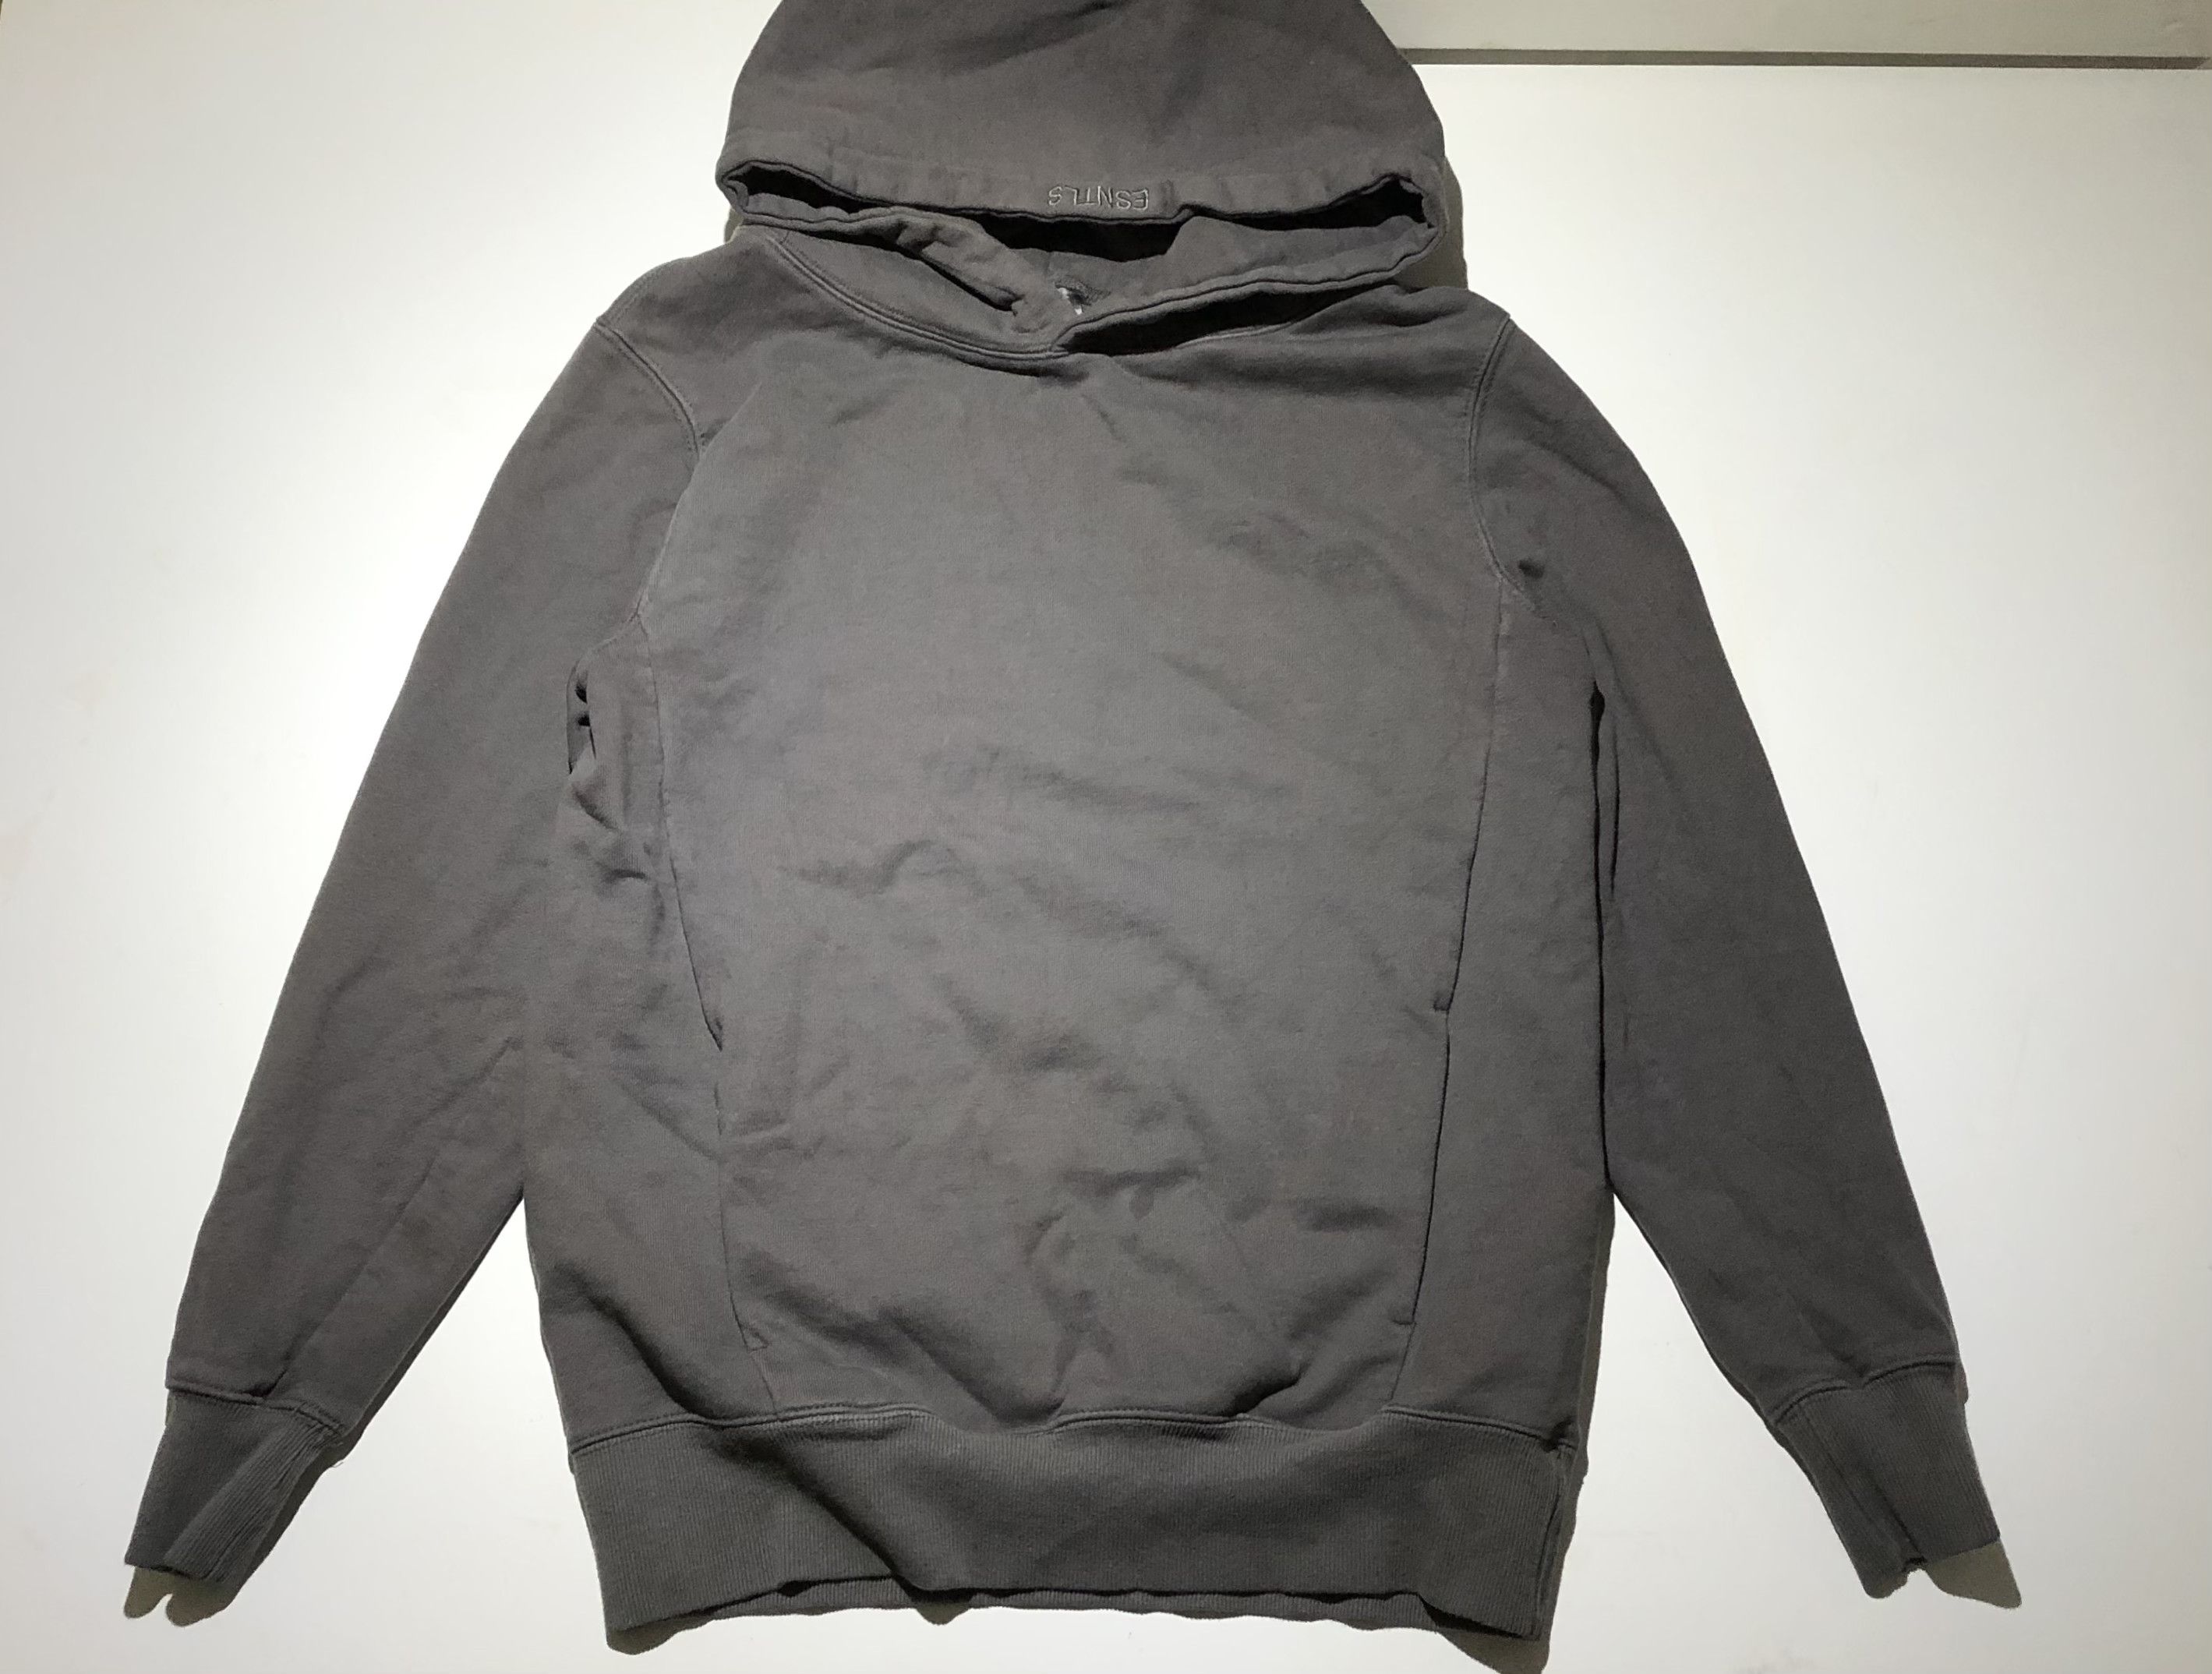 Japanese Brand Esntls Thick Grey Street Wear Essential Hoodie Size US S / EU 44-46 / 1 - 1 Preview